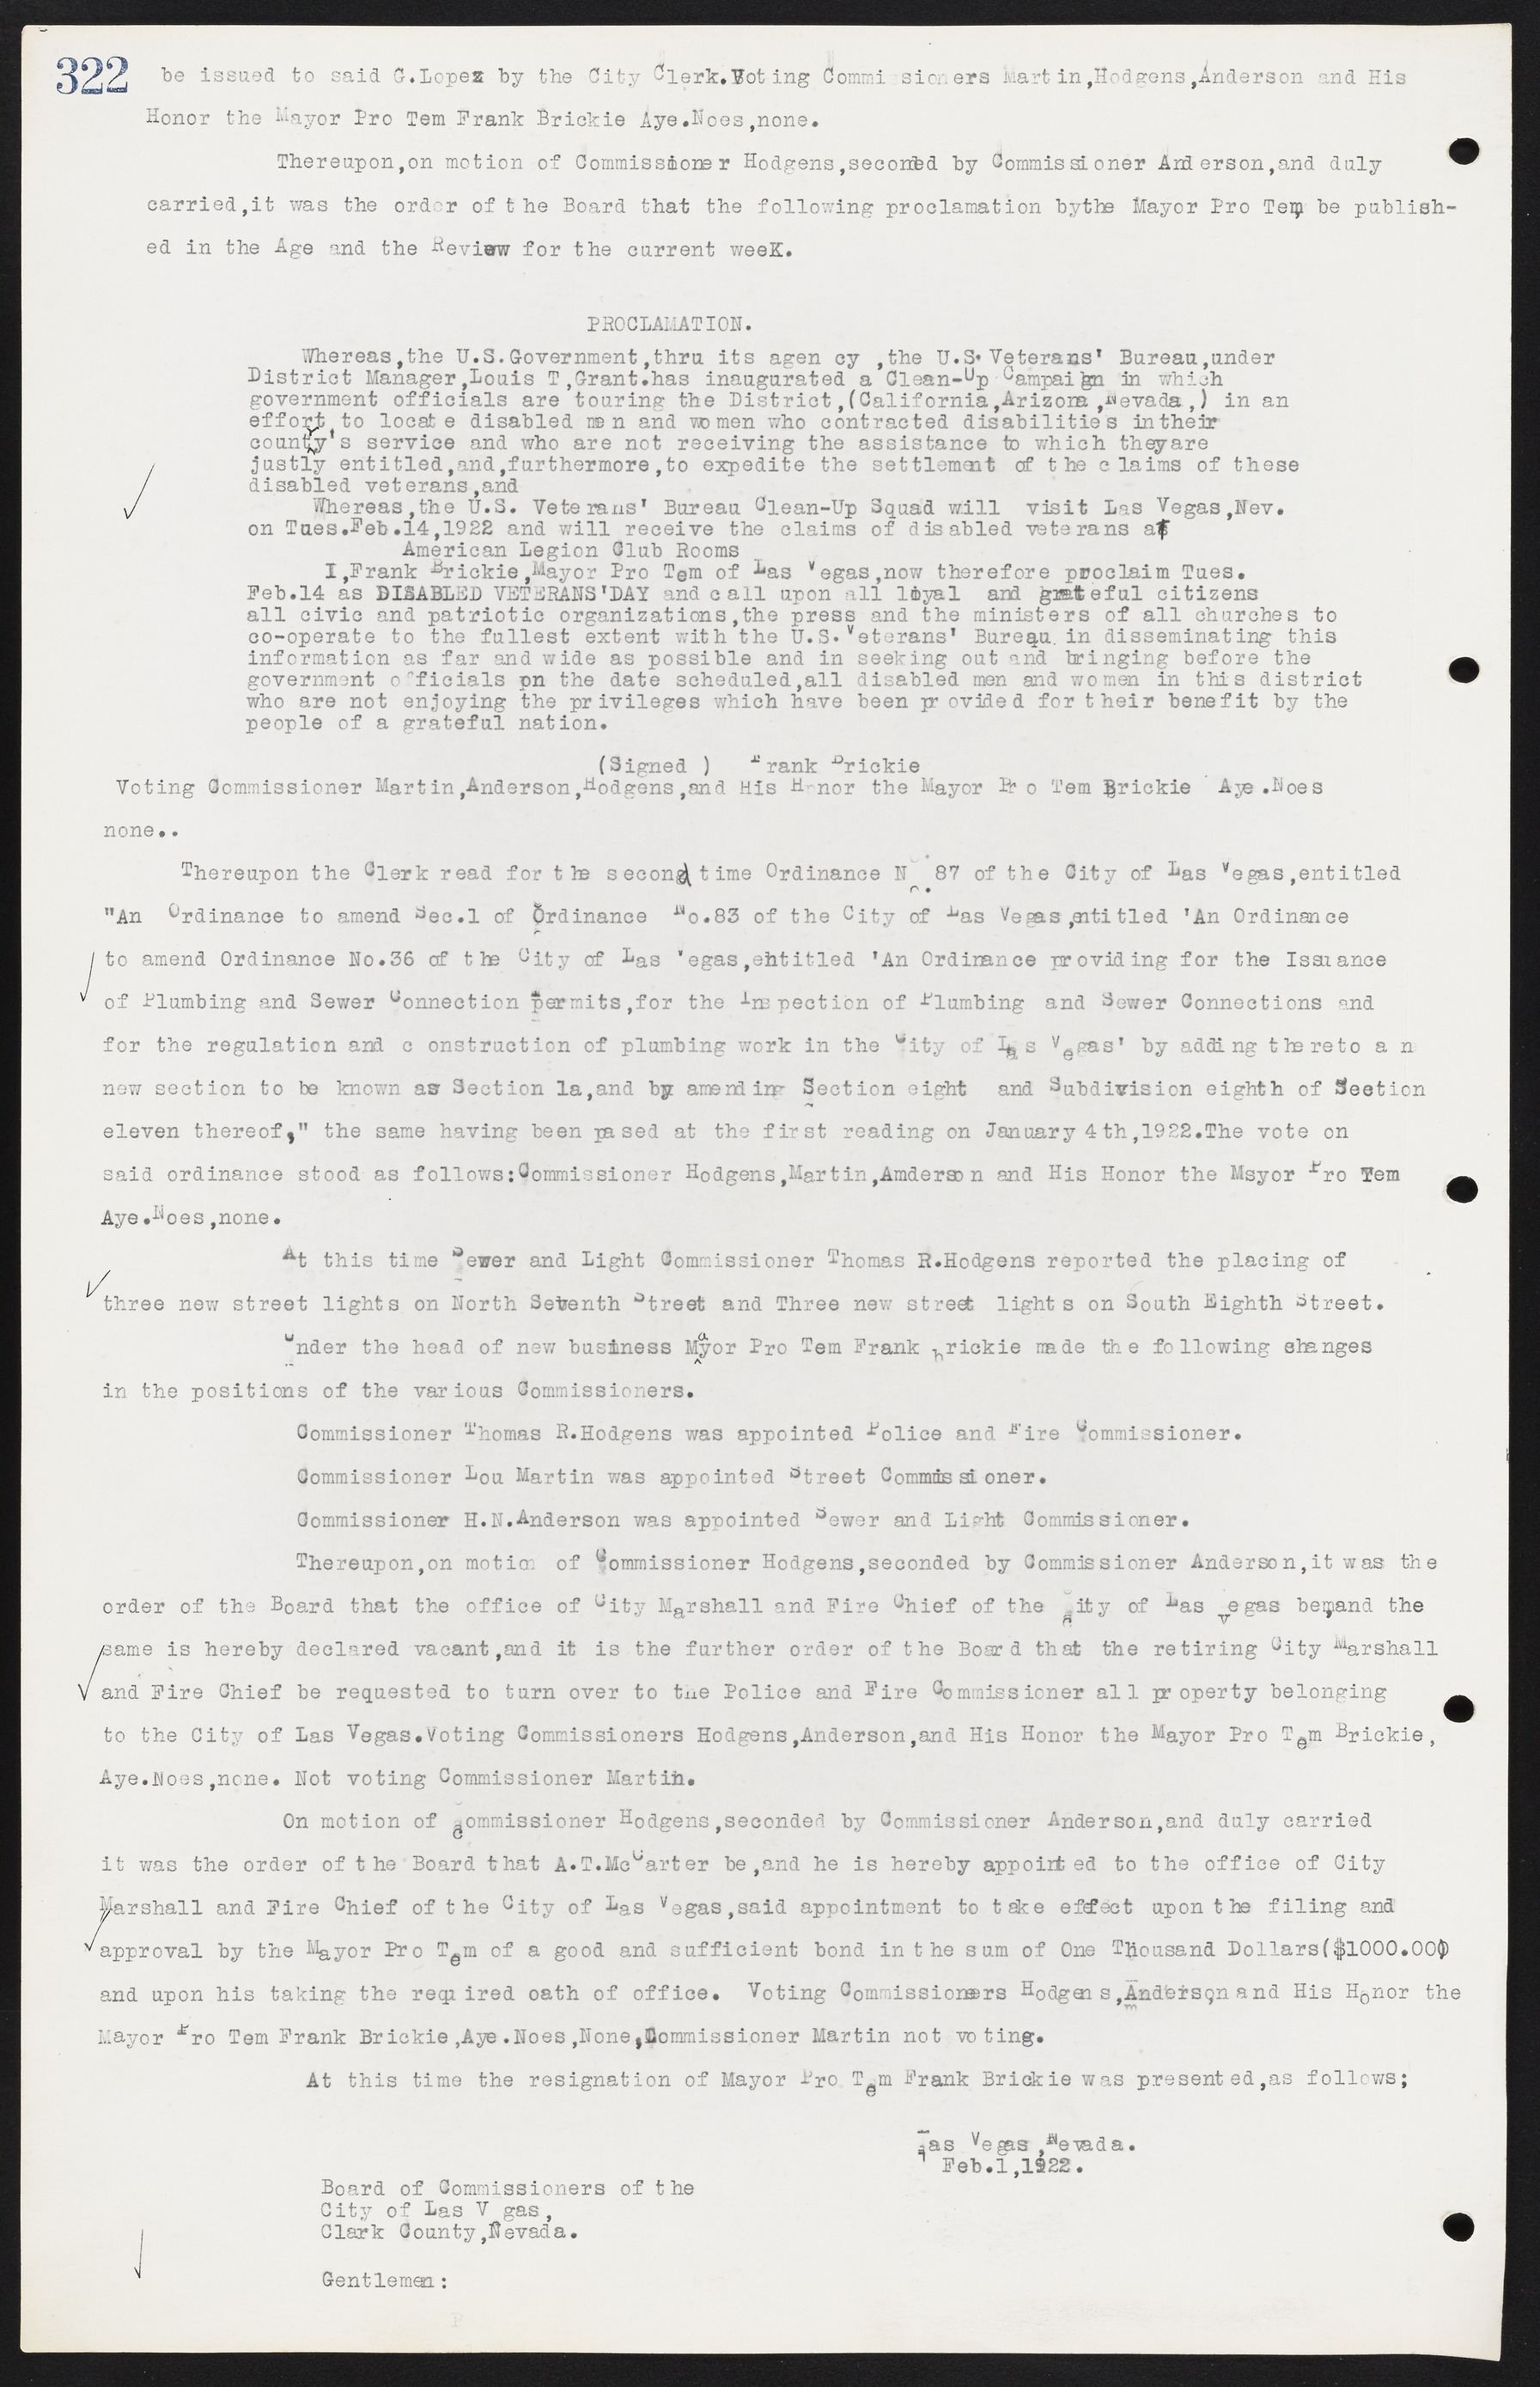 Las Vegas City Commission Minutes, June 22, 1911 to February 7, 1922, lvc000001-338